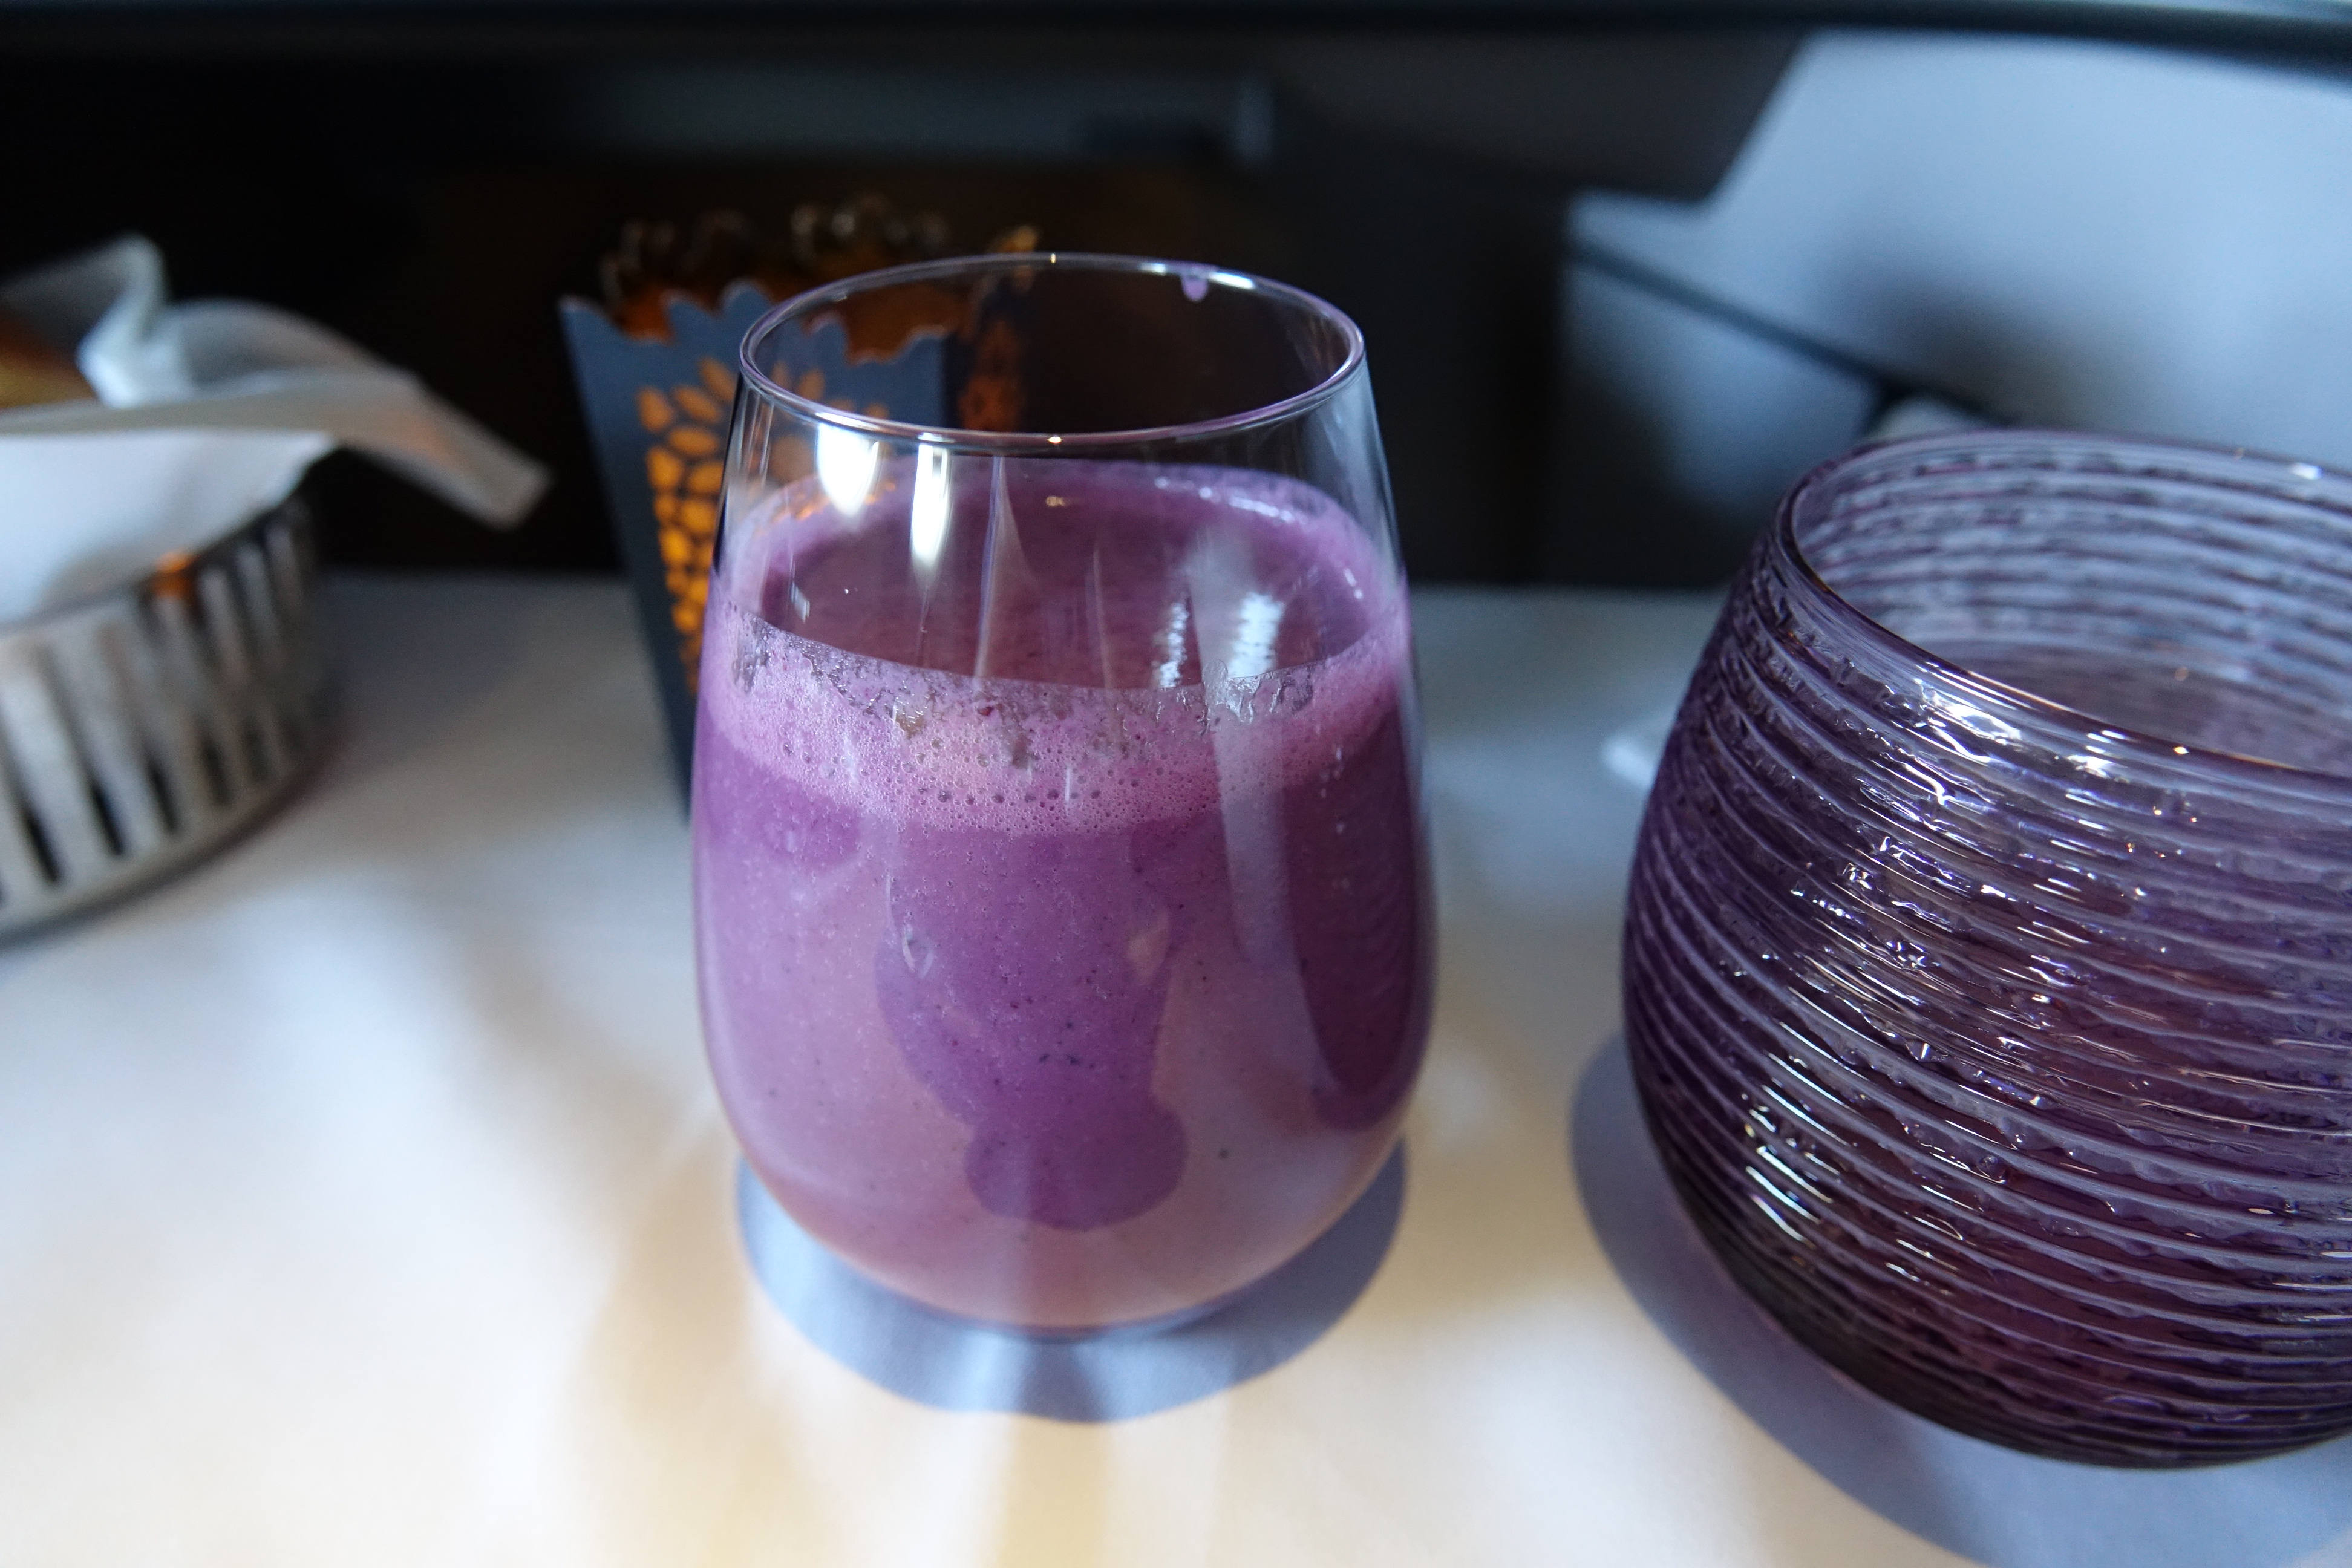 a glass of purple liquid